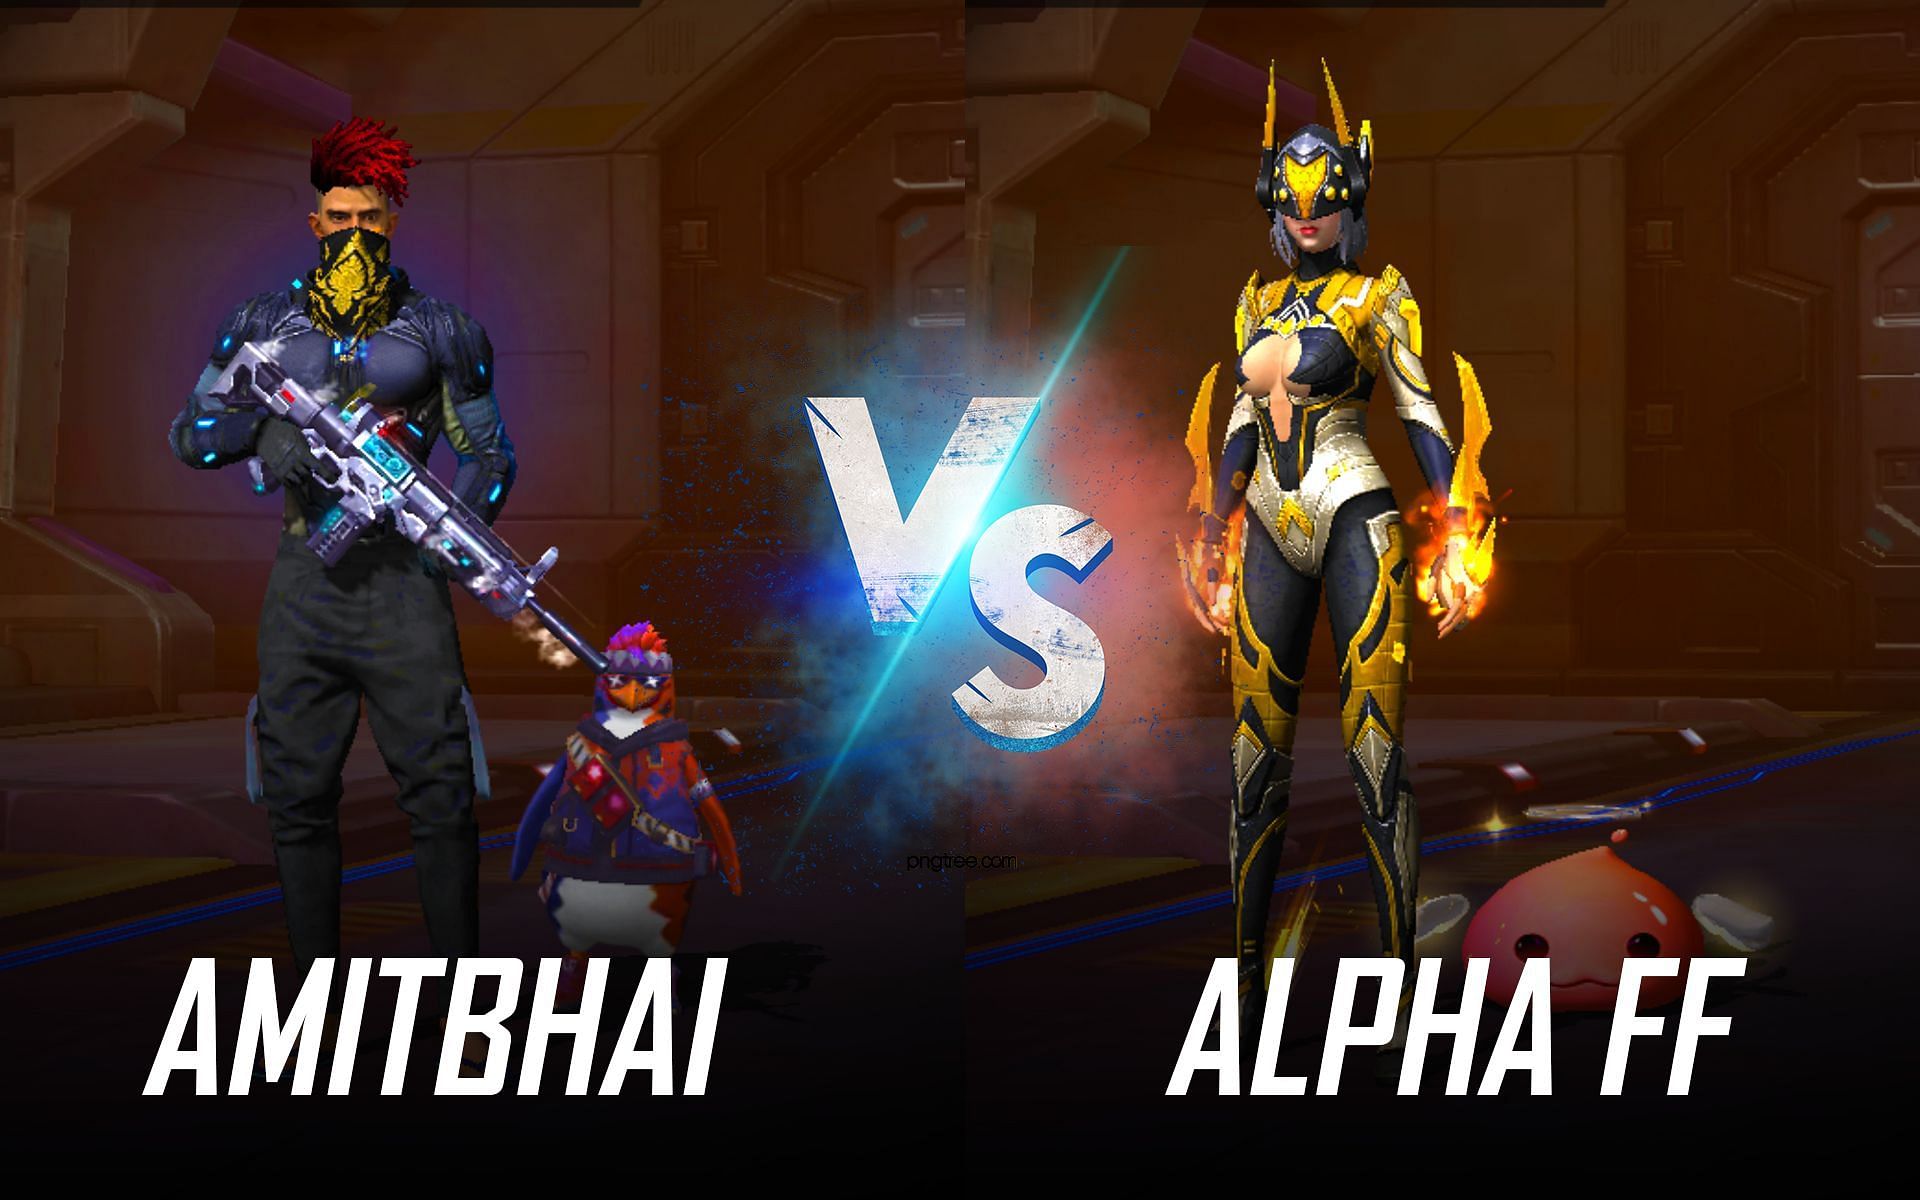 Amitbhai vs Alpha FF (Image via Sportskeeda)